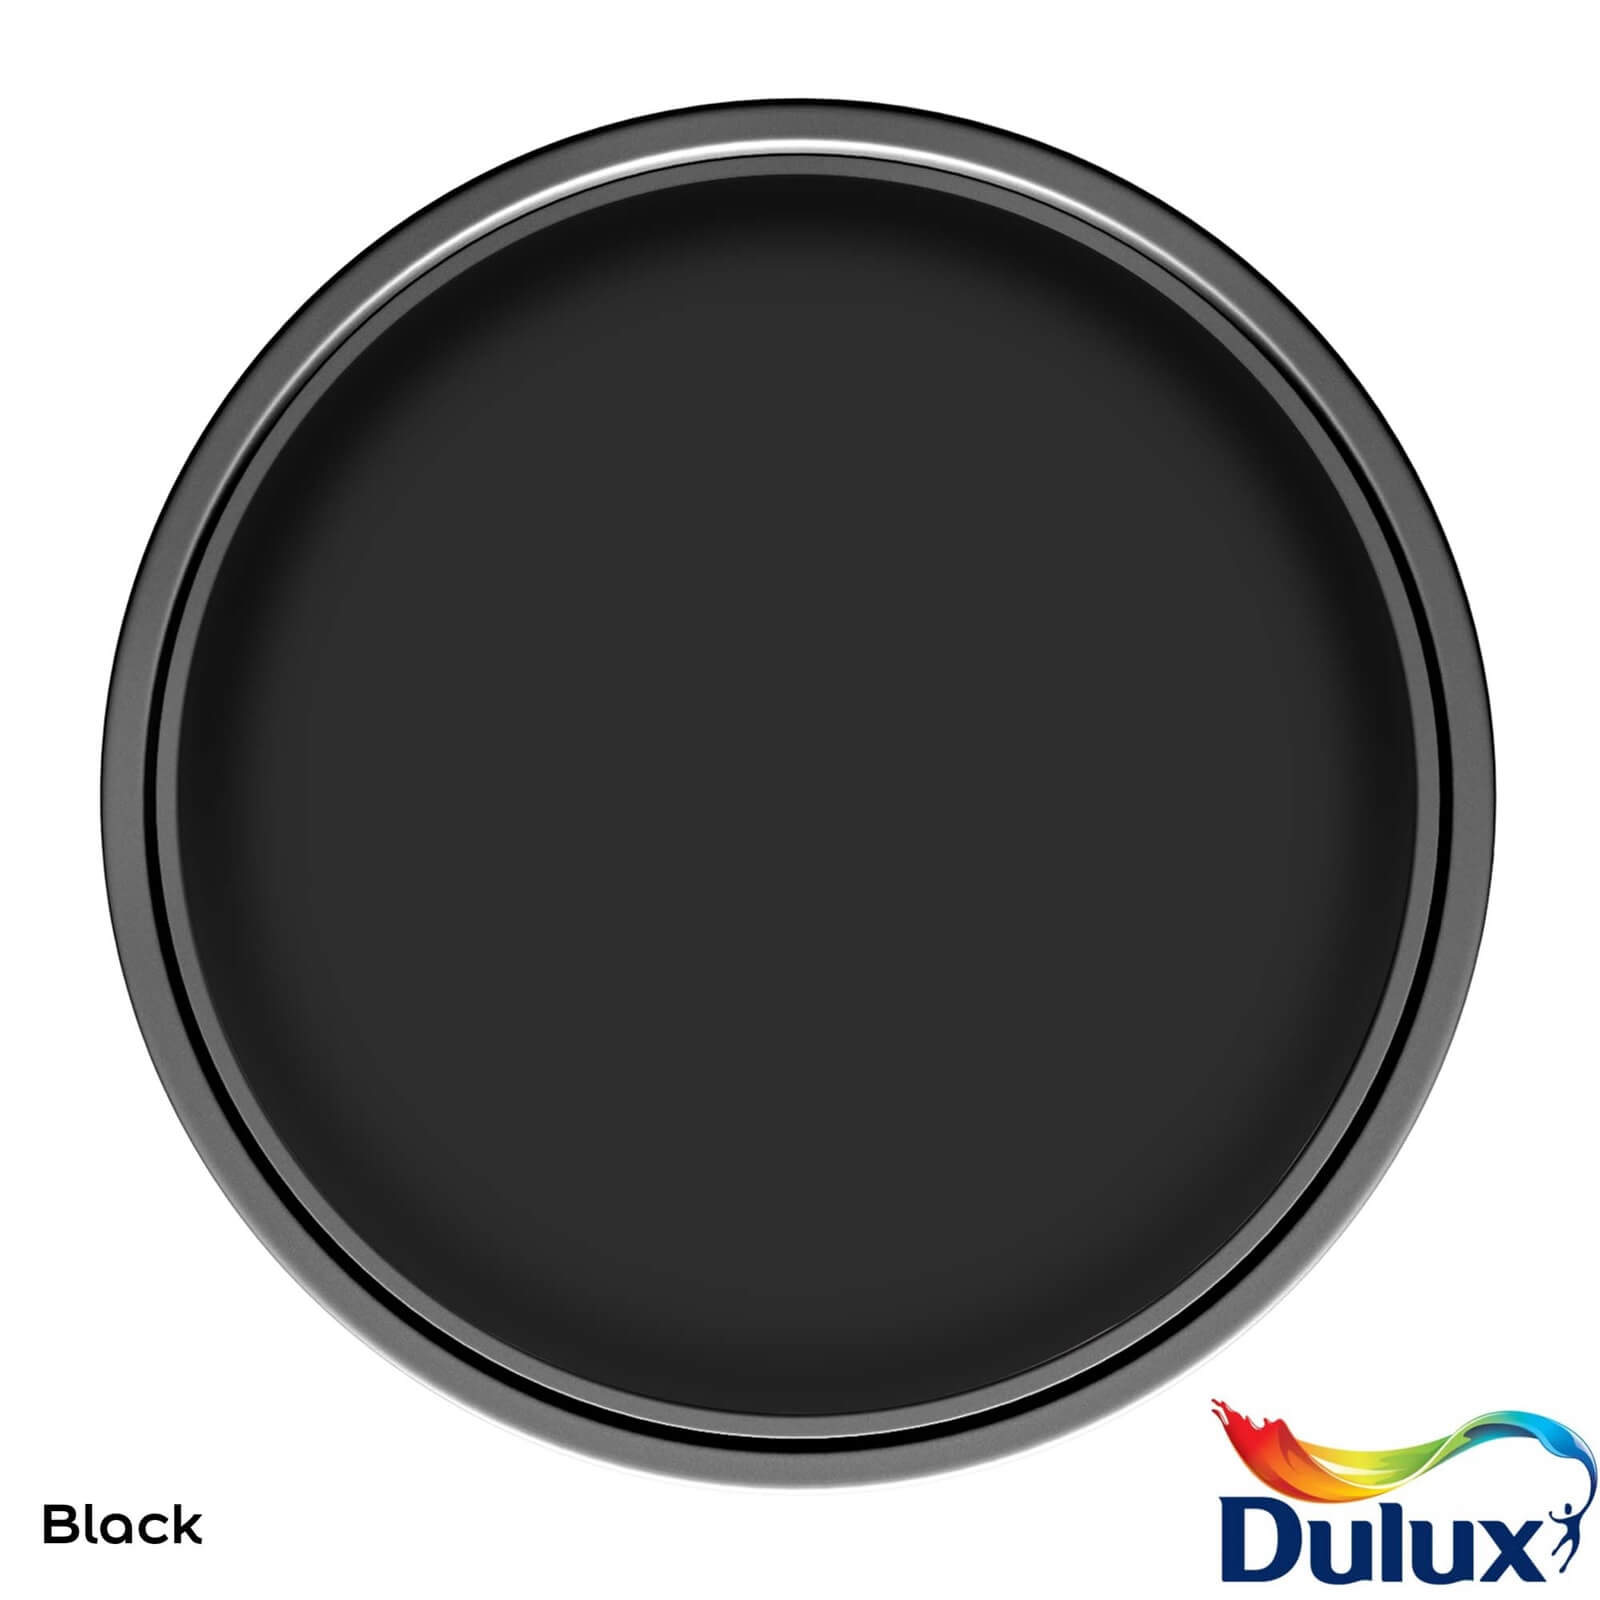 Dulux Once Satinwood Paint Black - 750ml